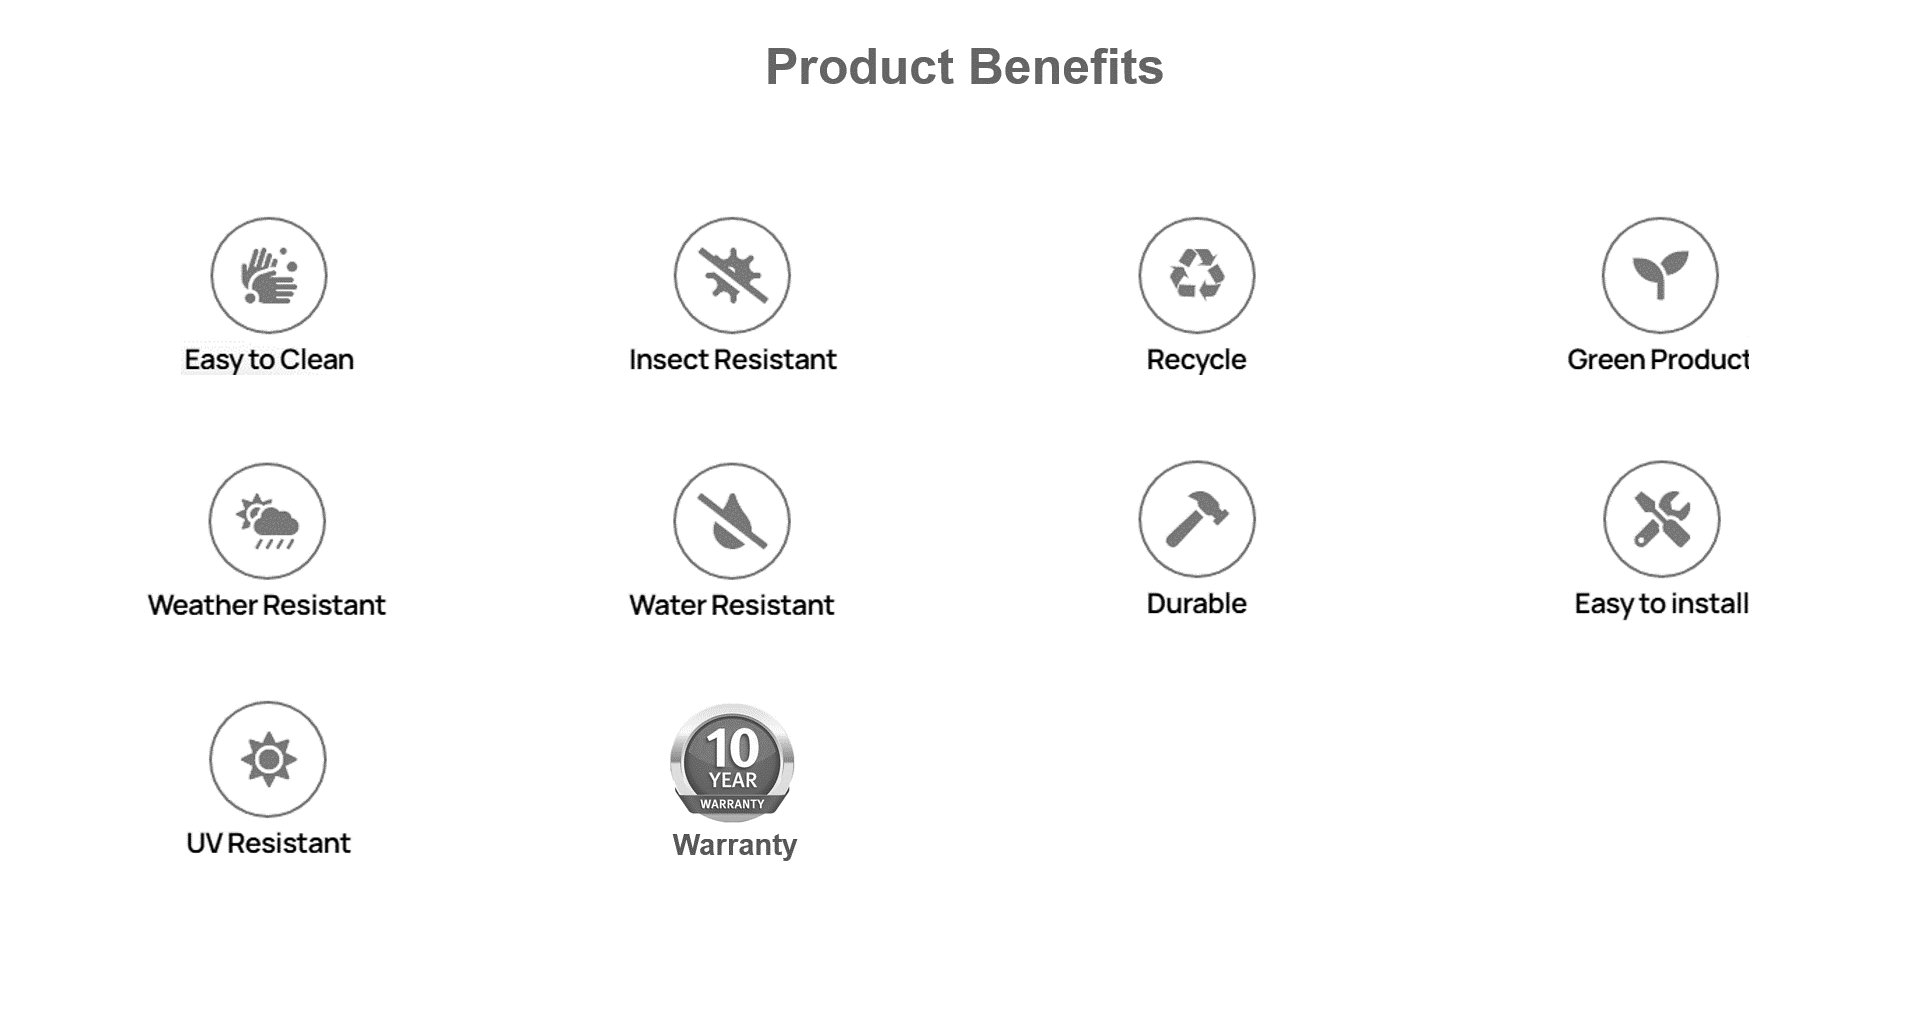 Product benefits